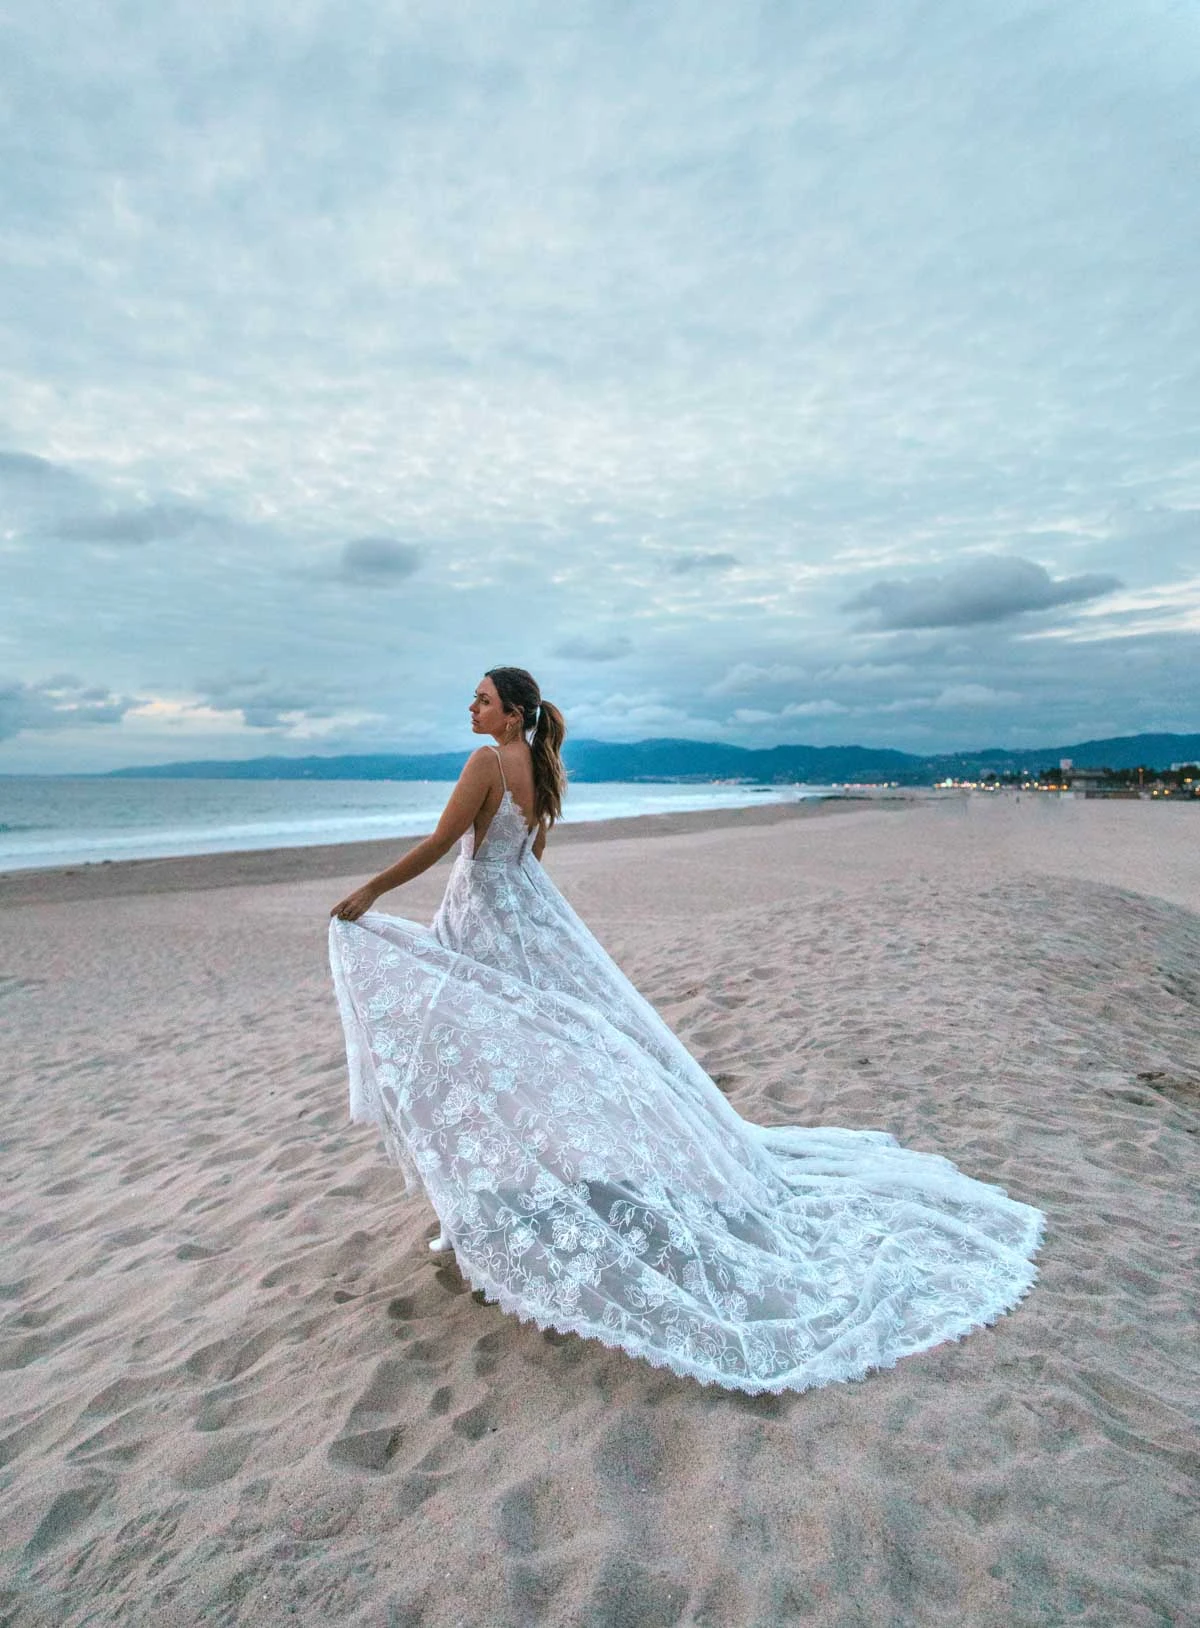 luna Romantic Boho Lace A-Line Slip Wedding Dress with Spaghetti Straps  by All Who Wander